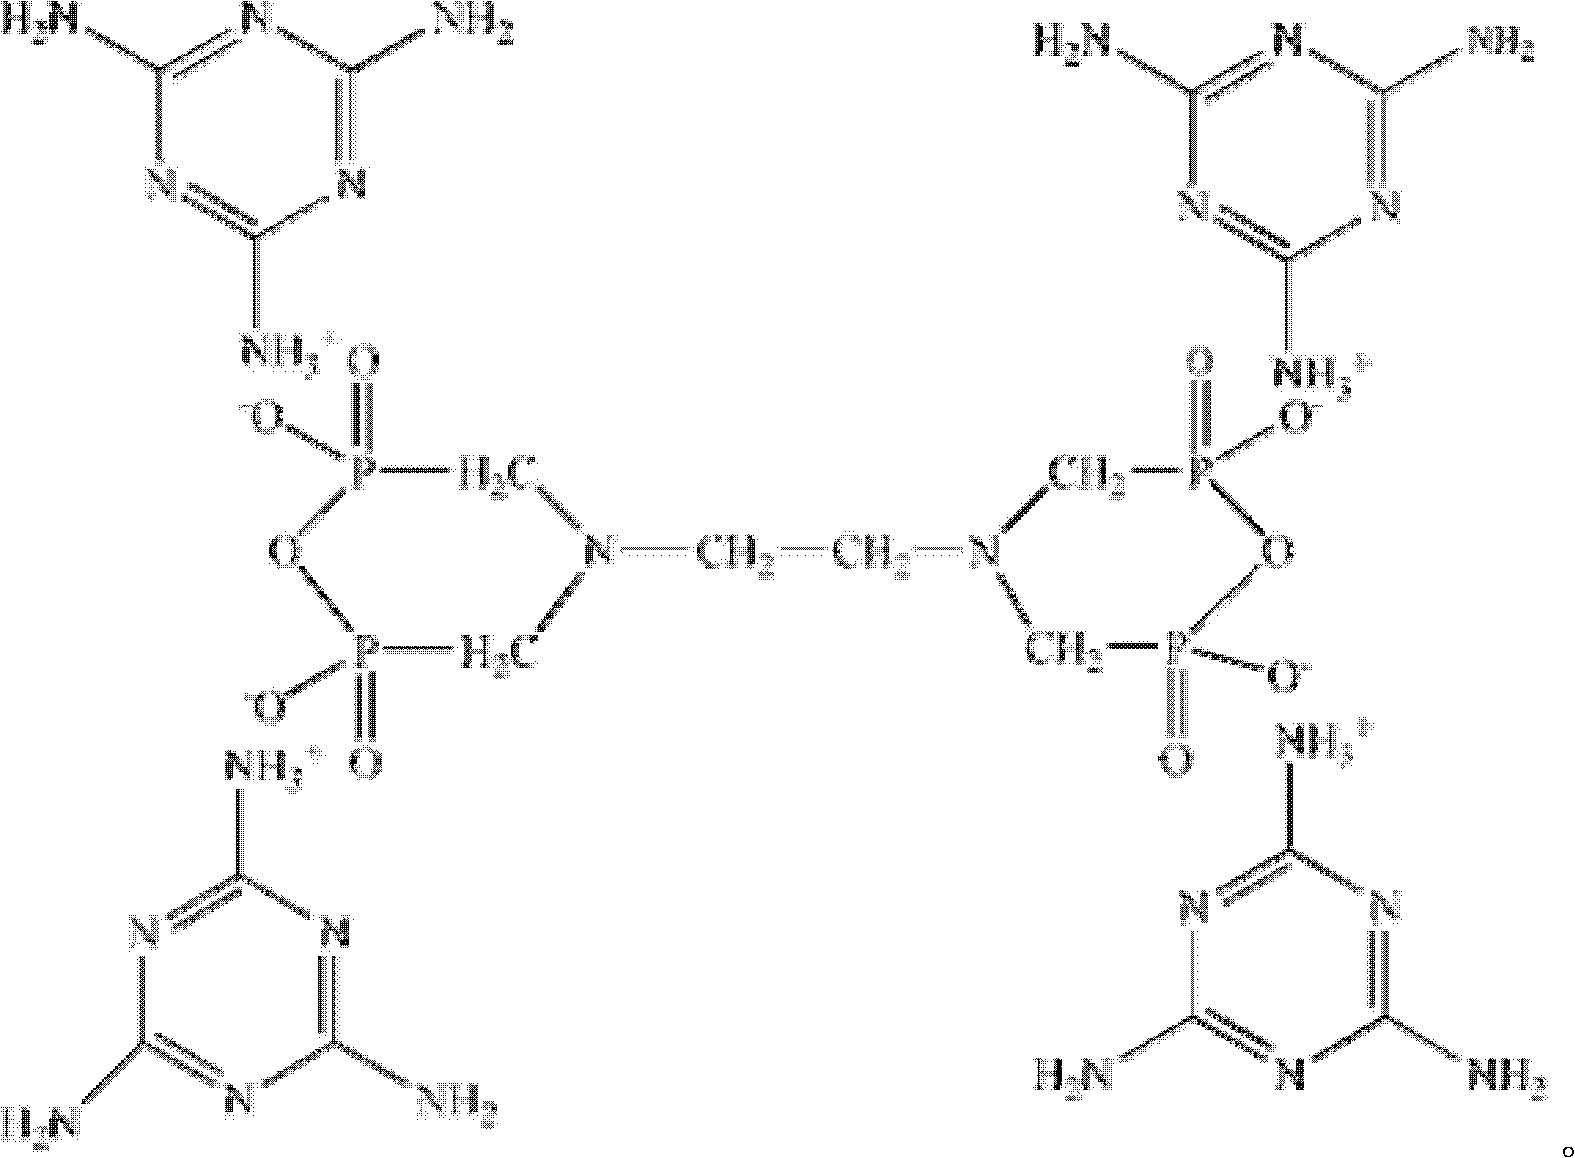 Ethylenediamine bicyclo-tetra methylenemelamine phosphonate compound and preparation method thereof